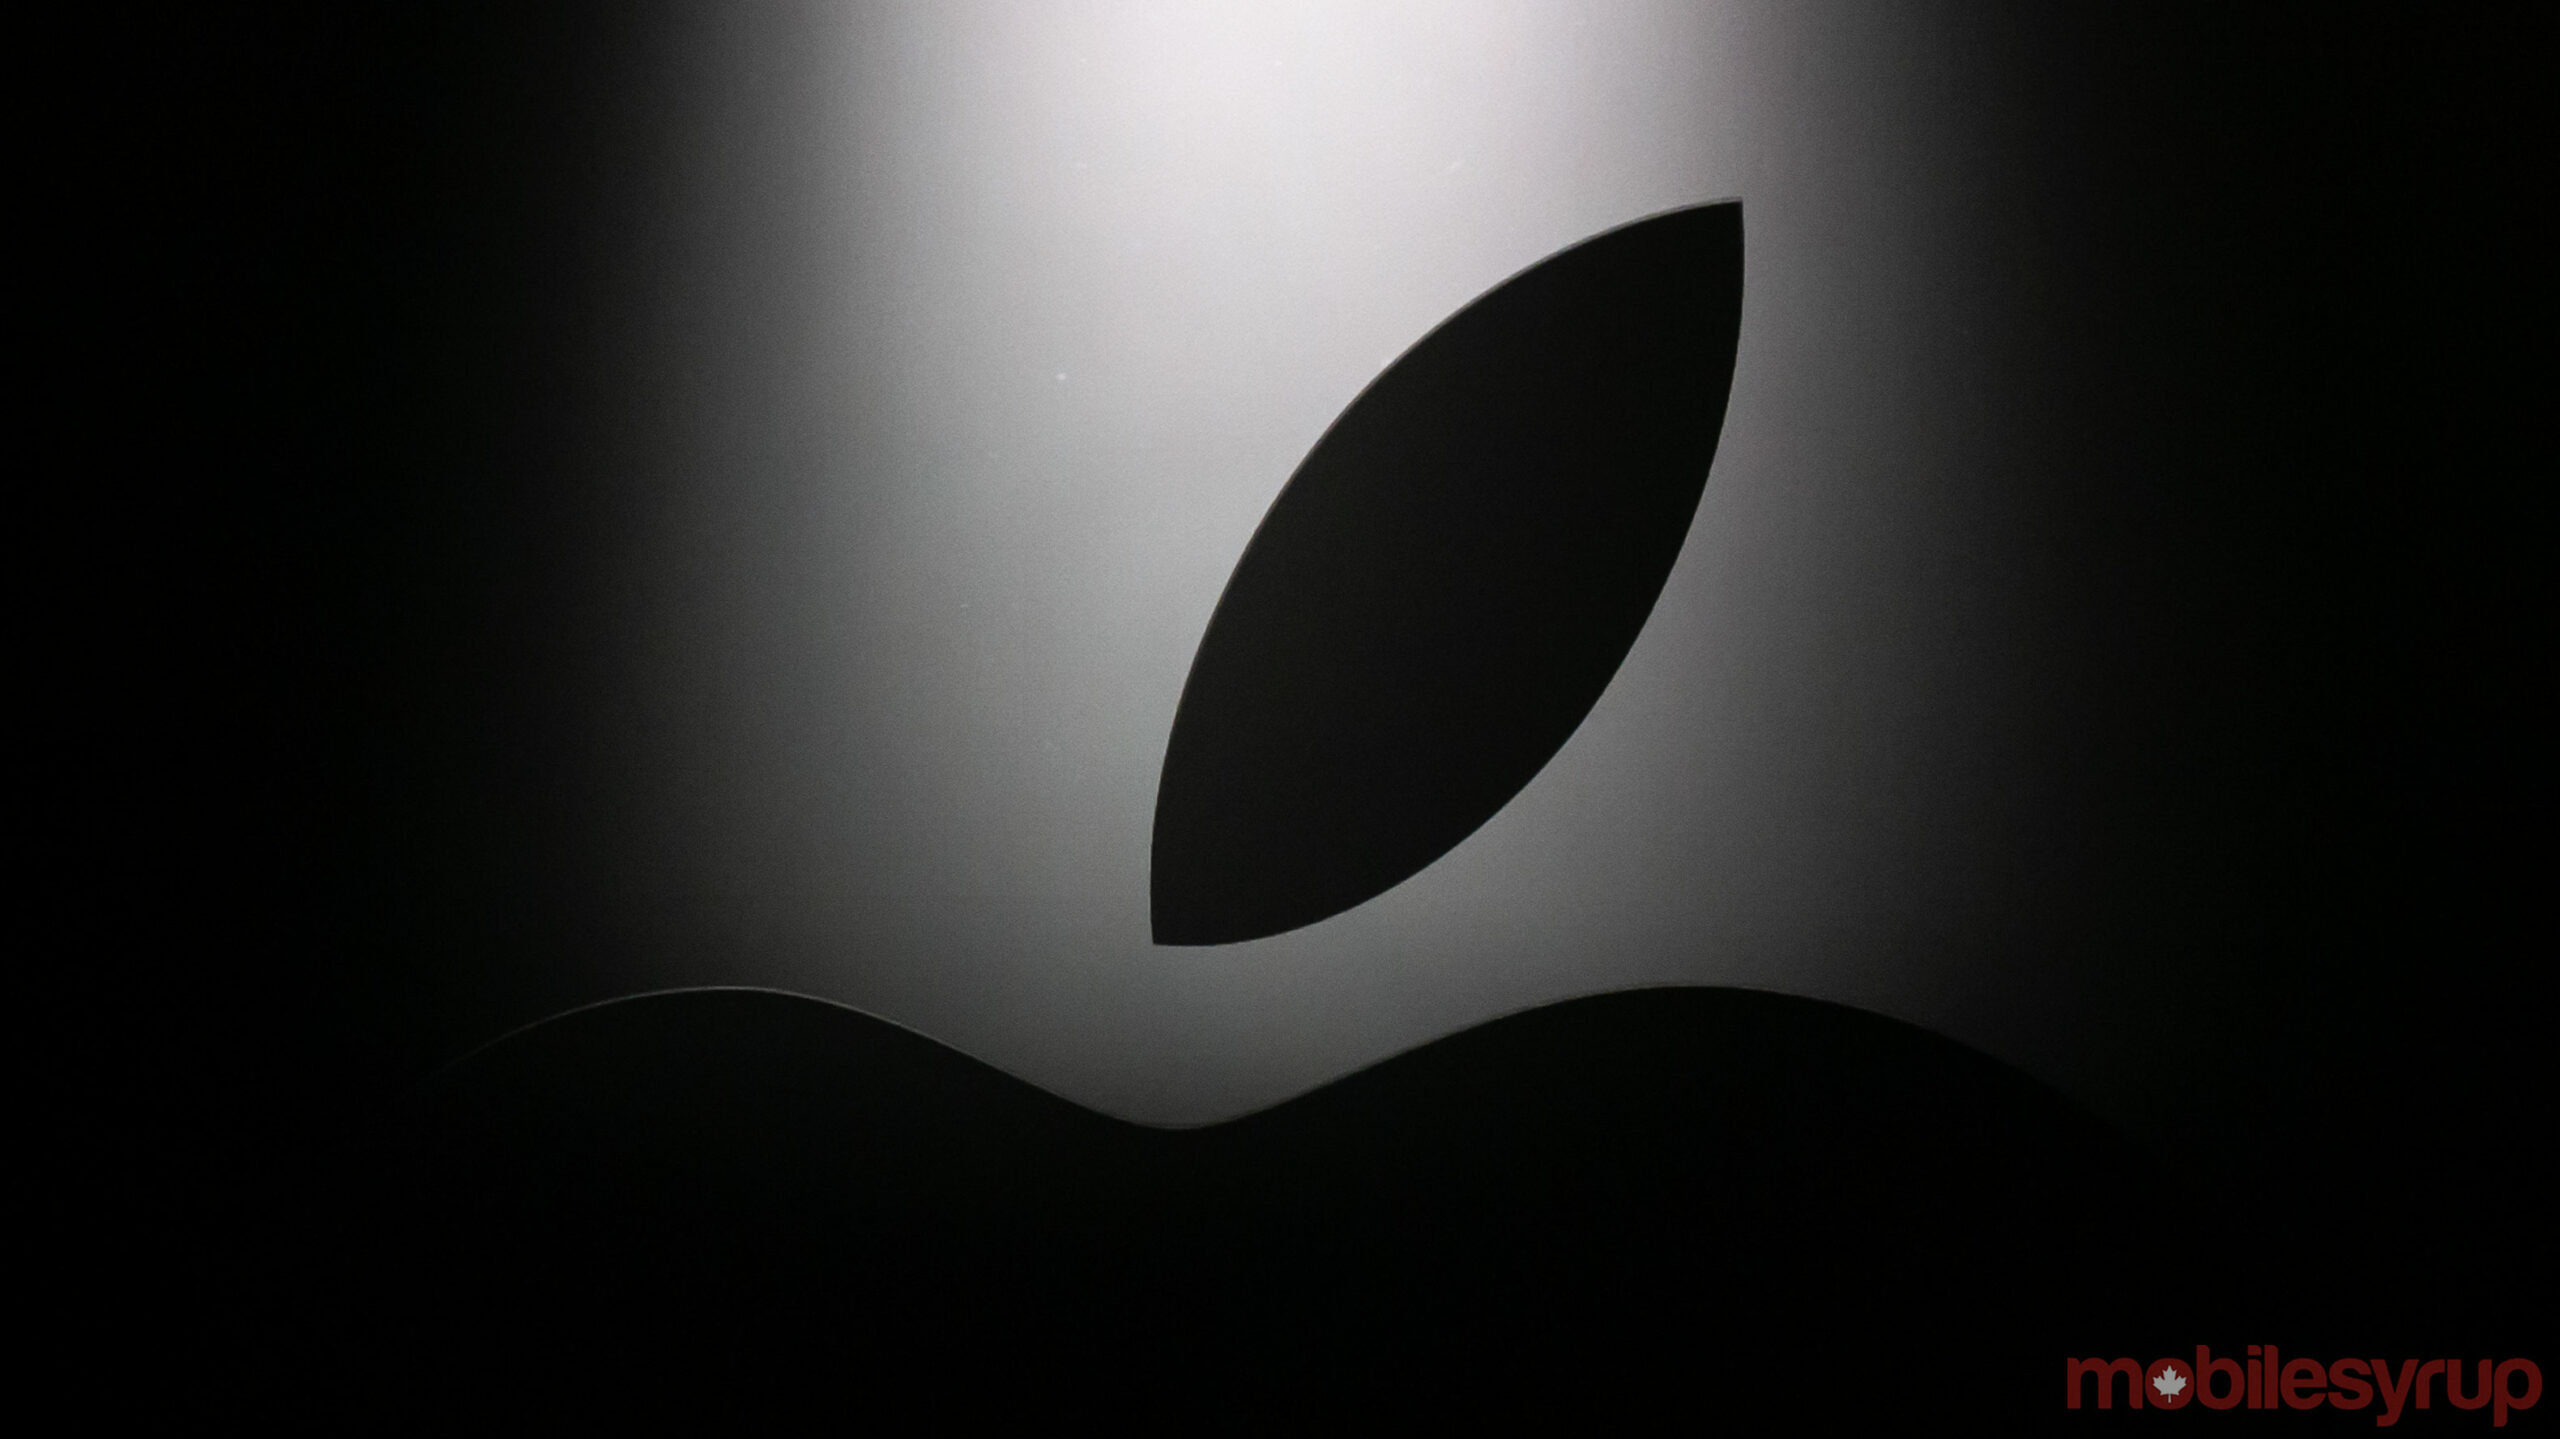 Apple's logo